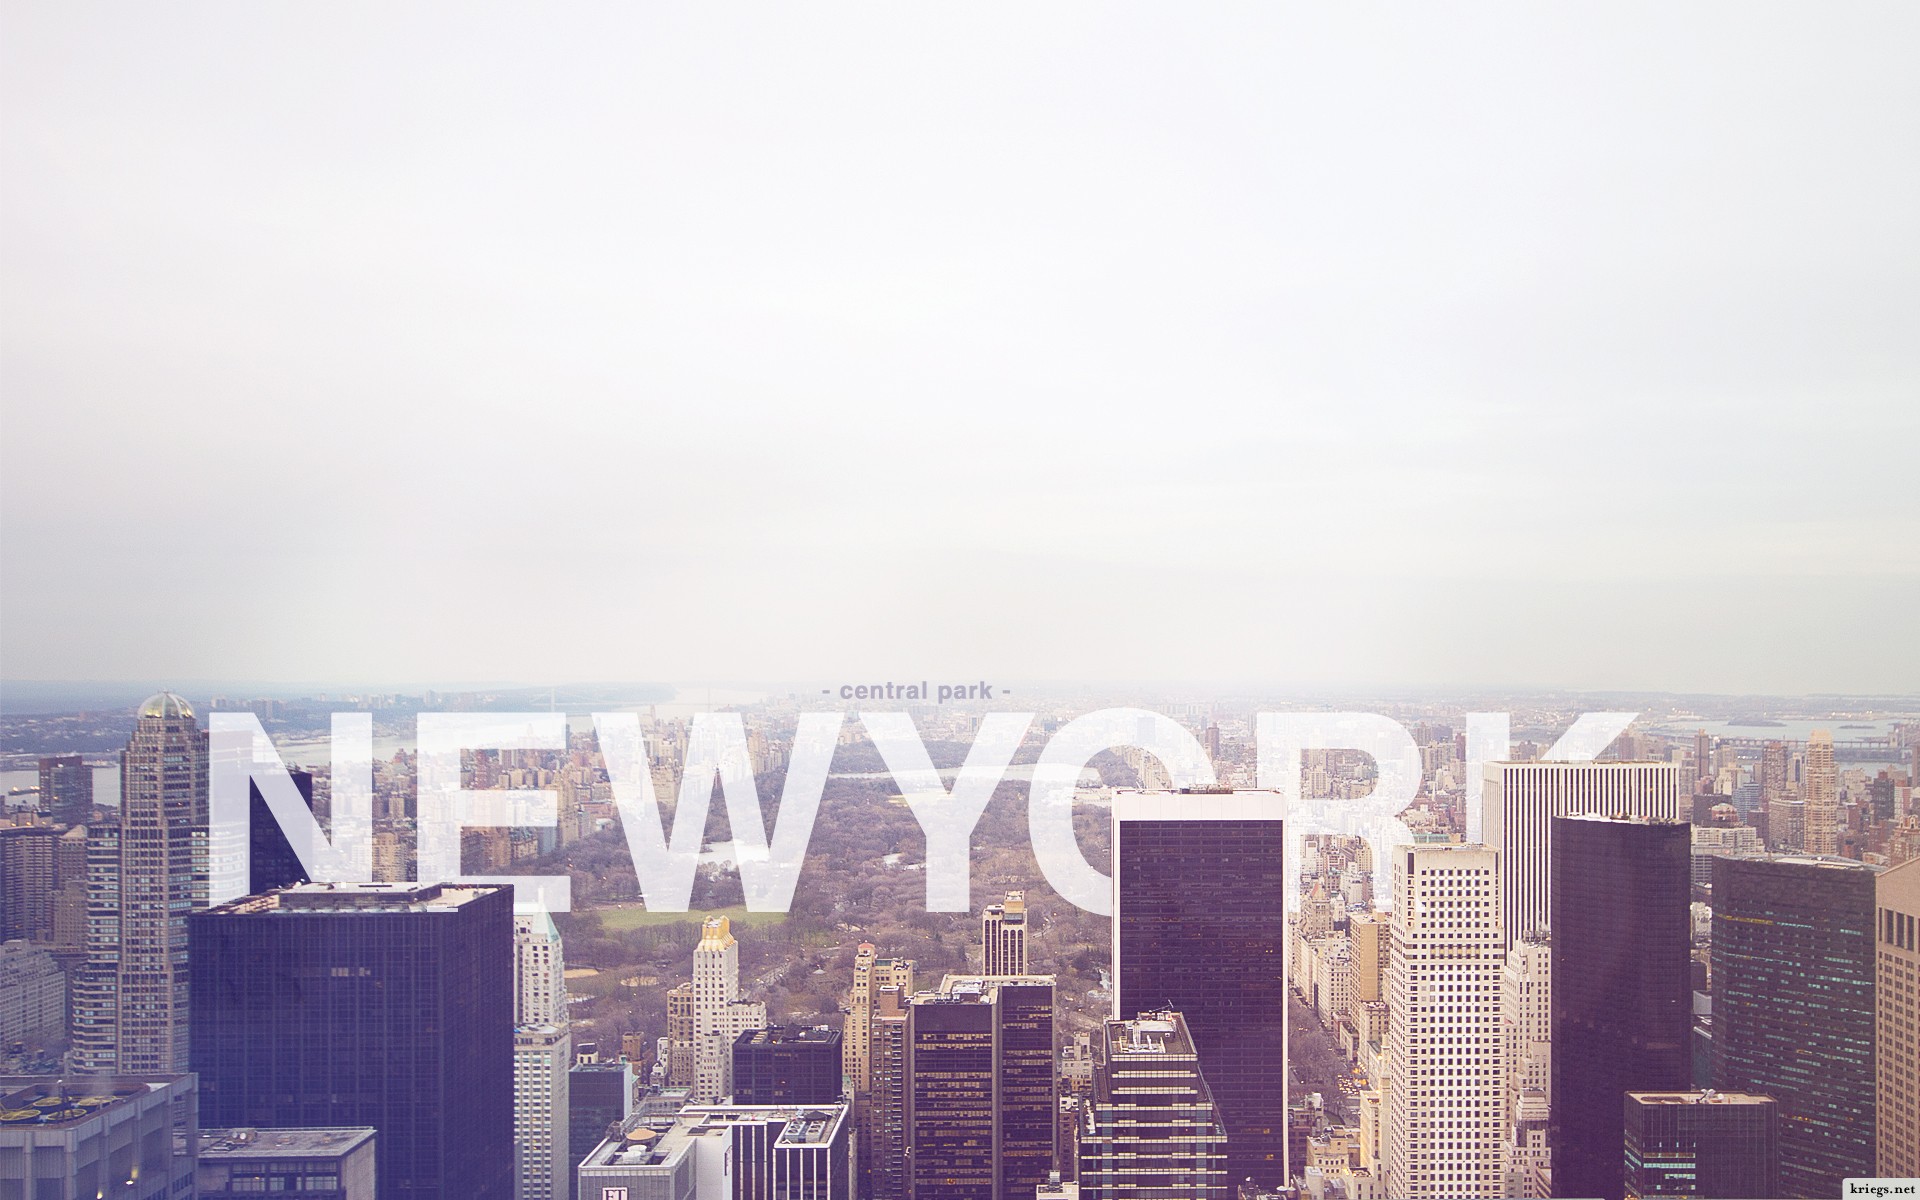 I want a new one. Нью Йорк надпись. Нью Йорк Эстетика с надписью. Красивая надпись New York. Нью-Йорк Сити надпись.